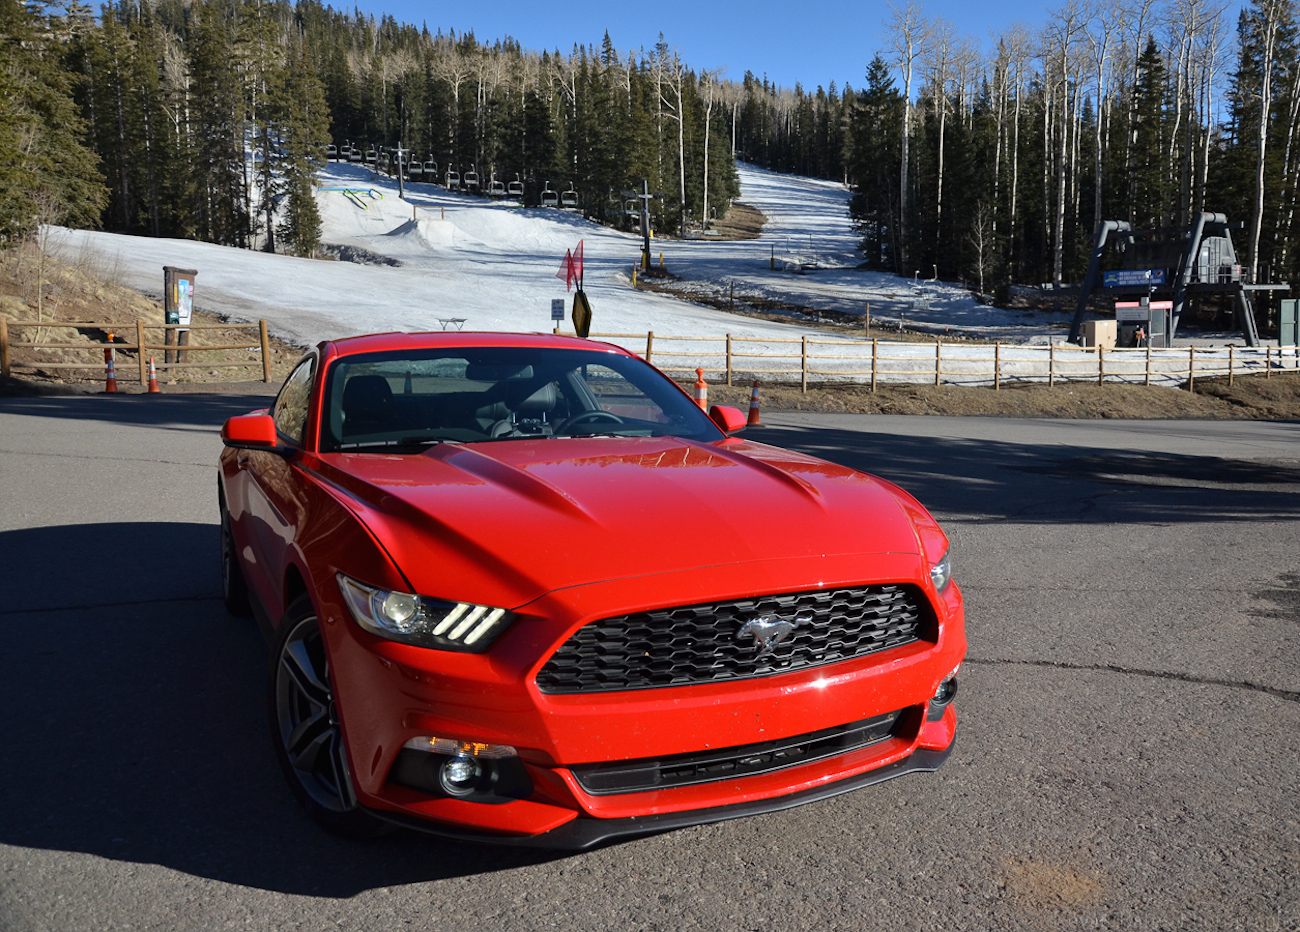 2015 Mustang Race Red Outdoors-2.jpg